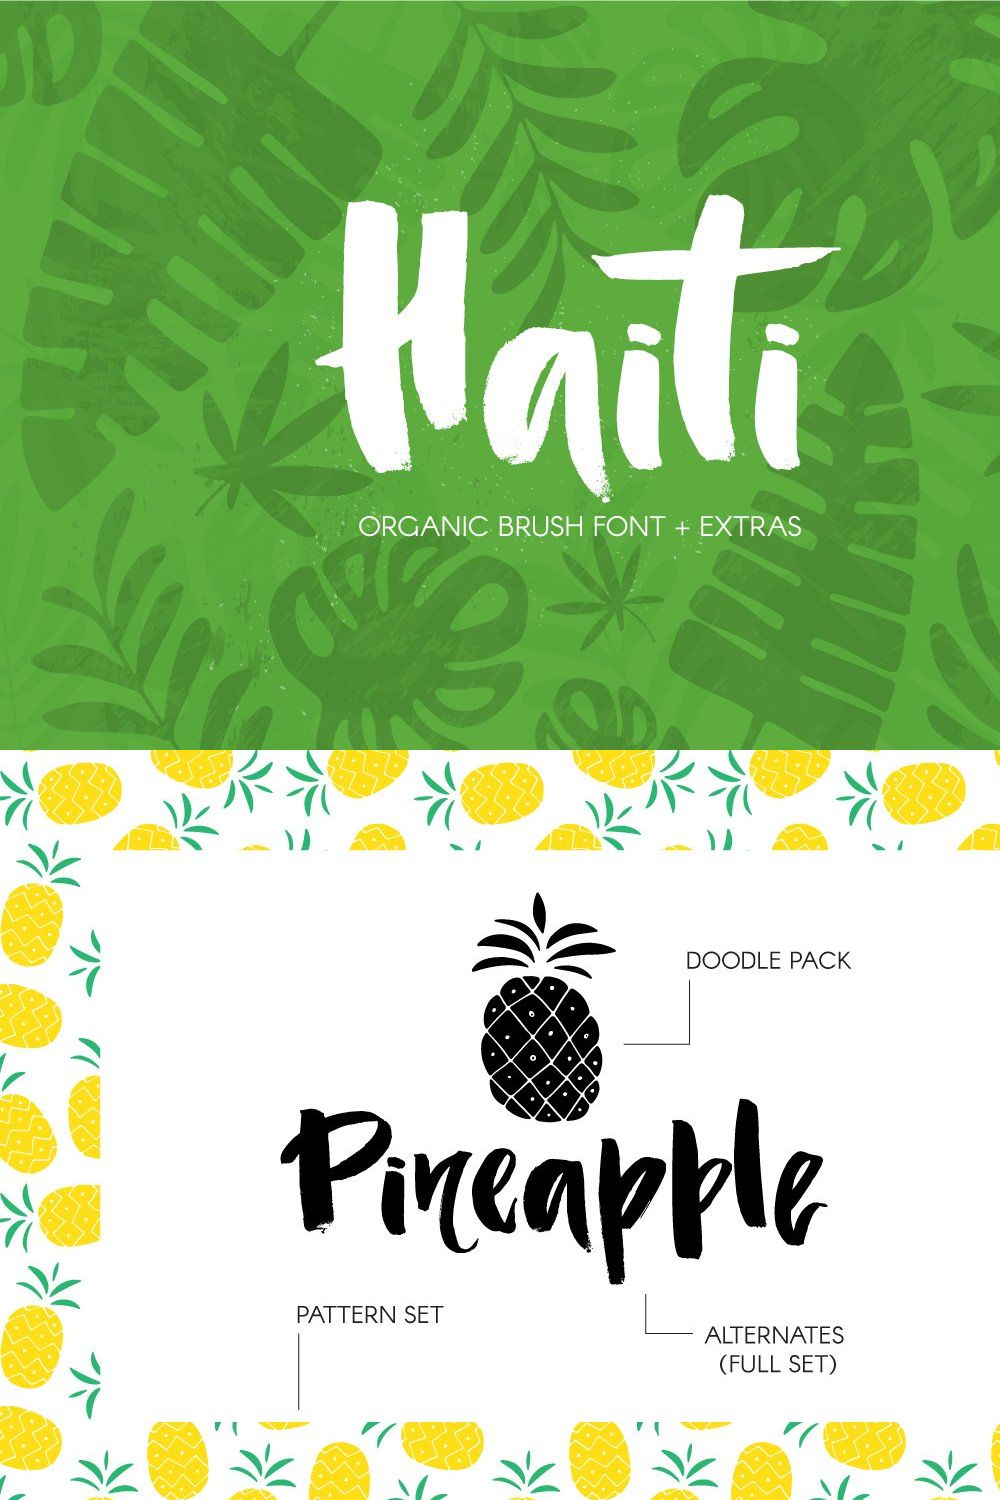 Haiti Organic Brush Font +Extras pinterest preview image.